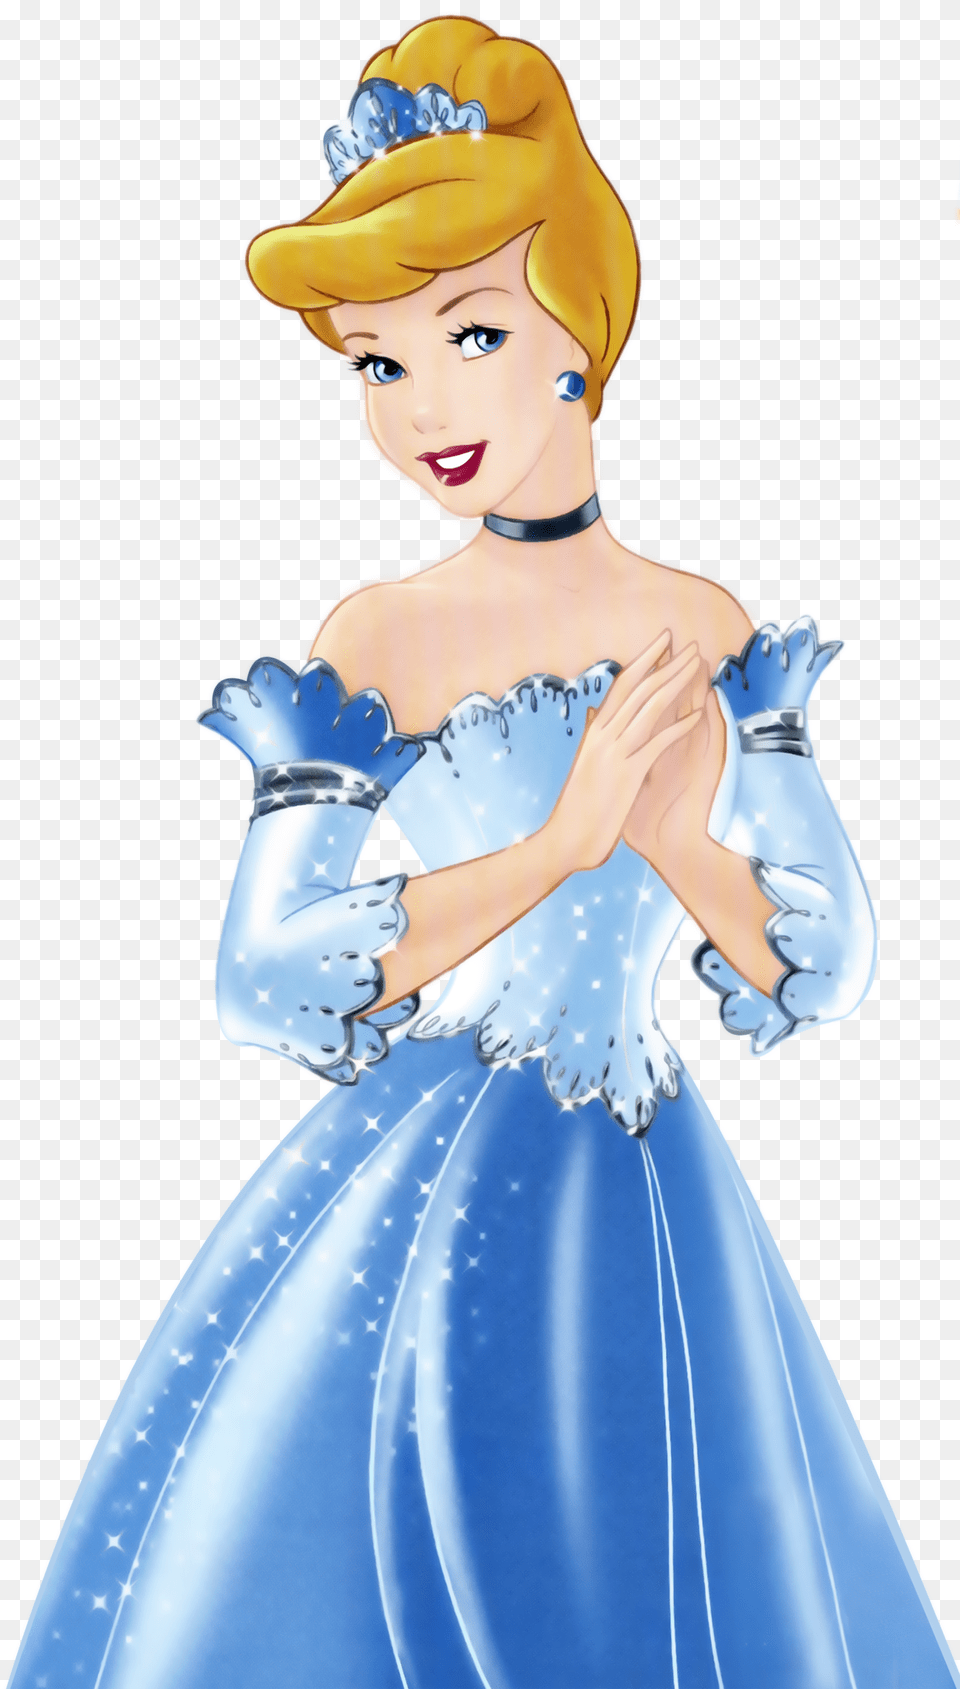 Transparent Corona Princesa Imagenes De Princesas Disney, Fashion, Clothing, Dress, Evening Dress Free Png